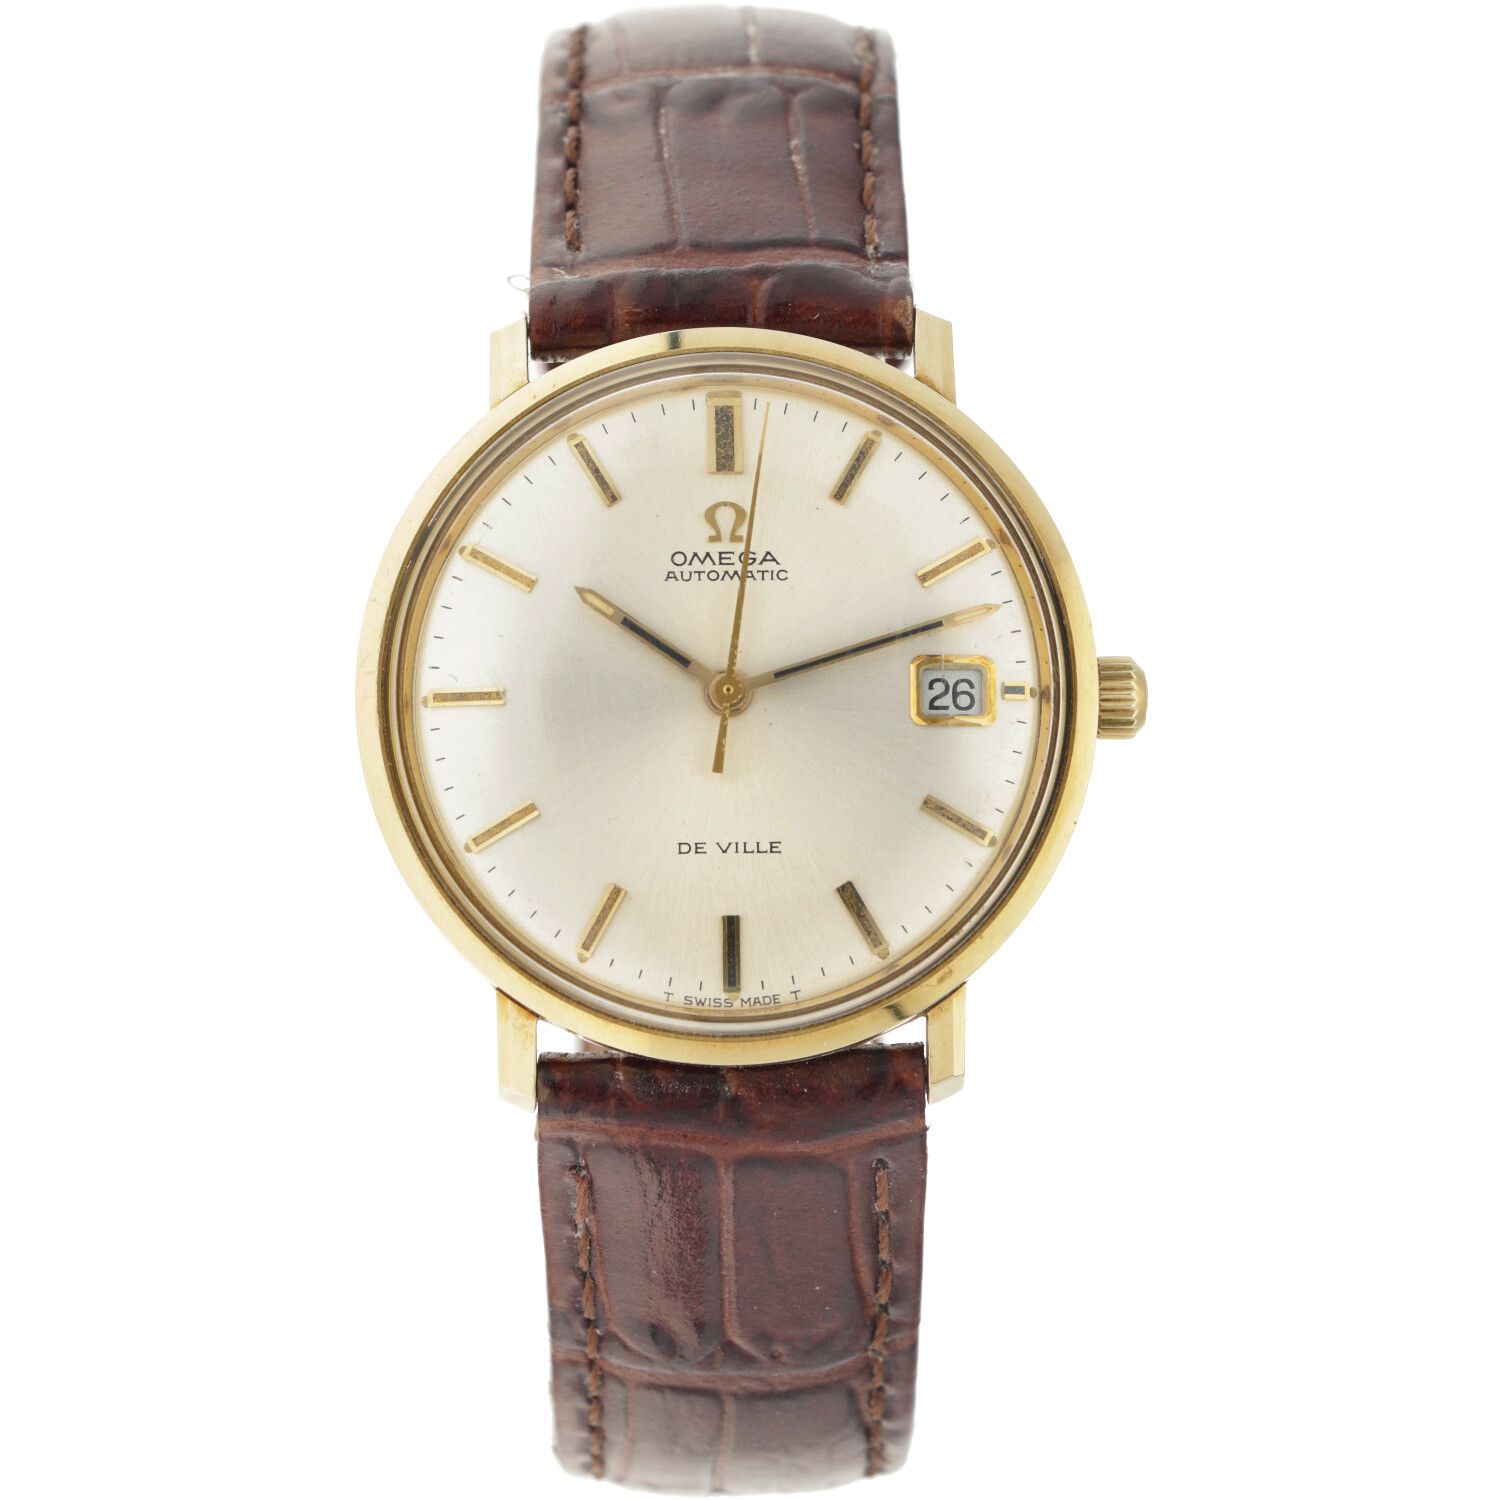 Omega de Ville 166033 - Men's watch - approx. 1970. Case: yellow gold (14 kt.) -&hellip;